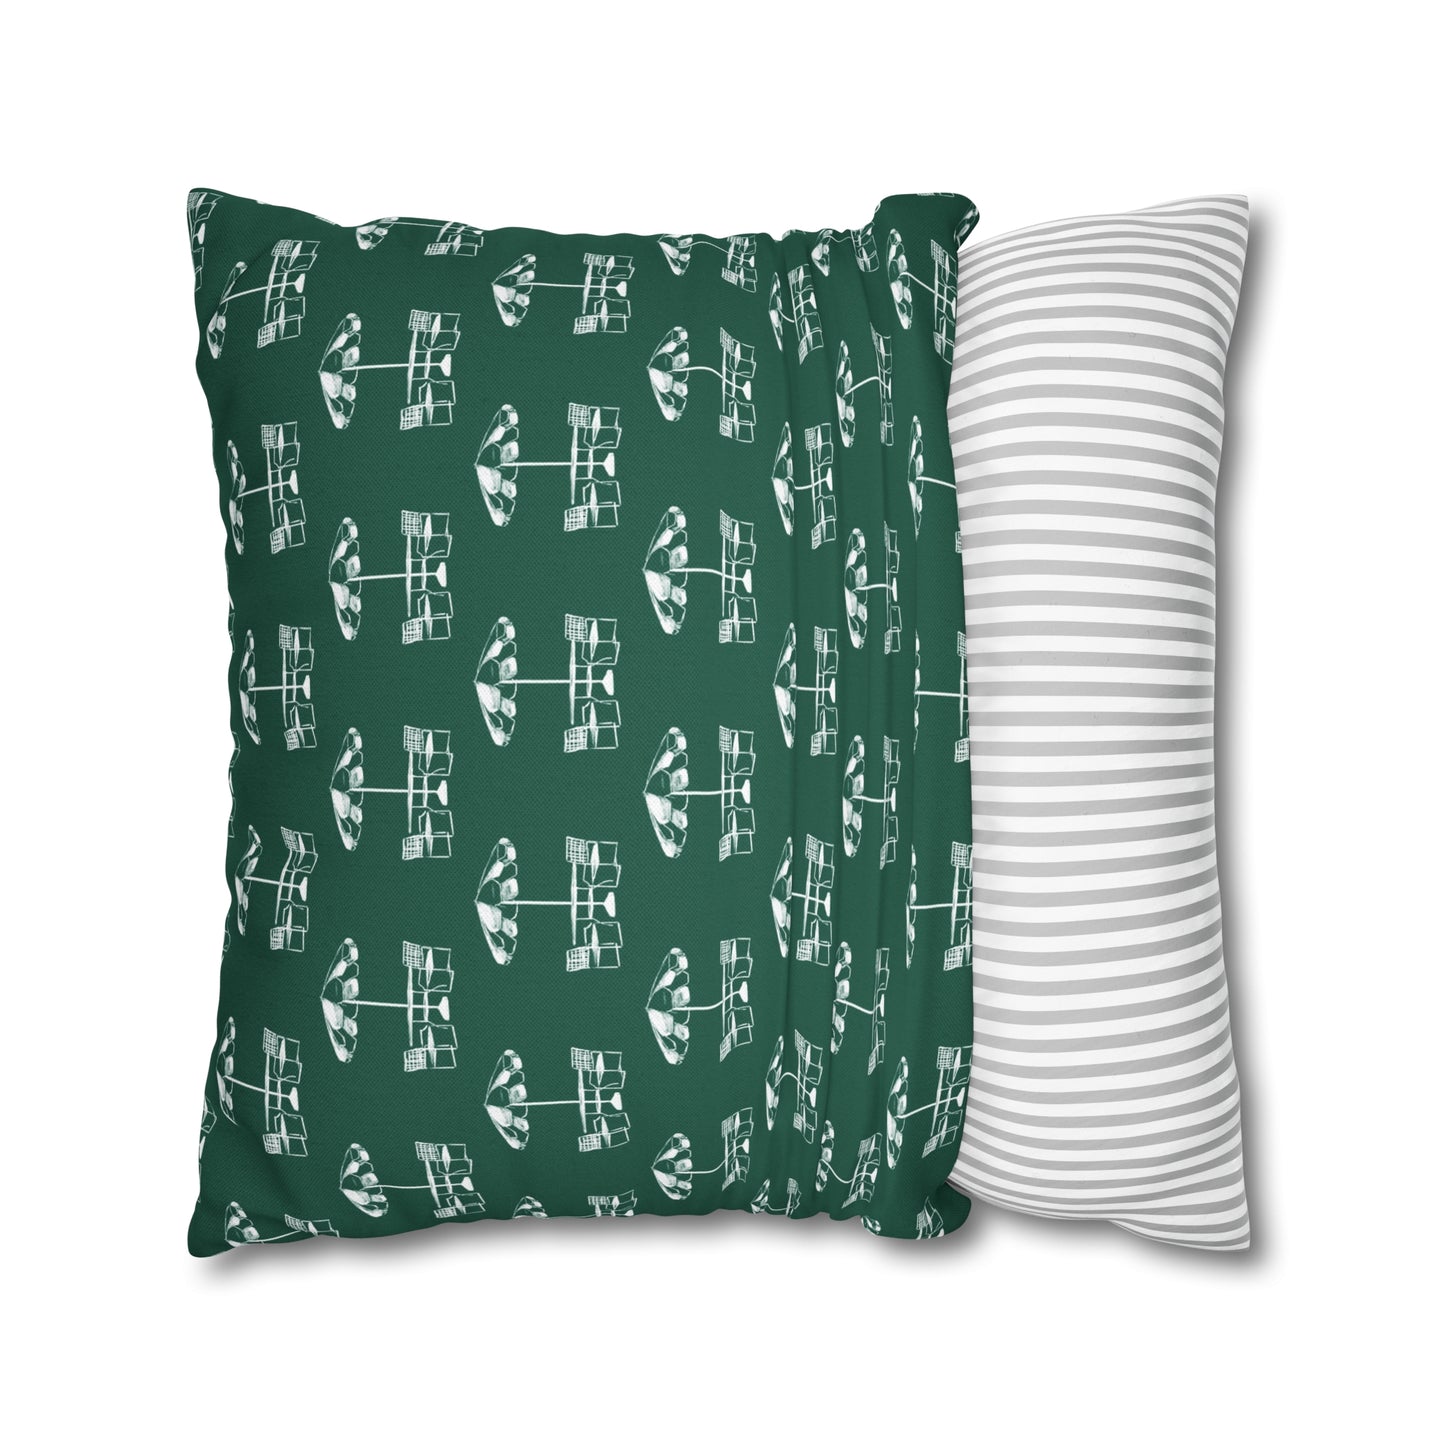 Augusta Green Umbrellas, Pillow Case Only